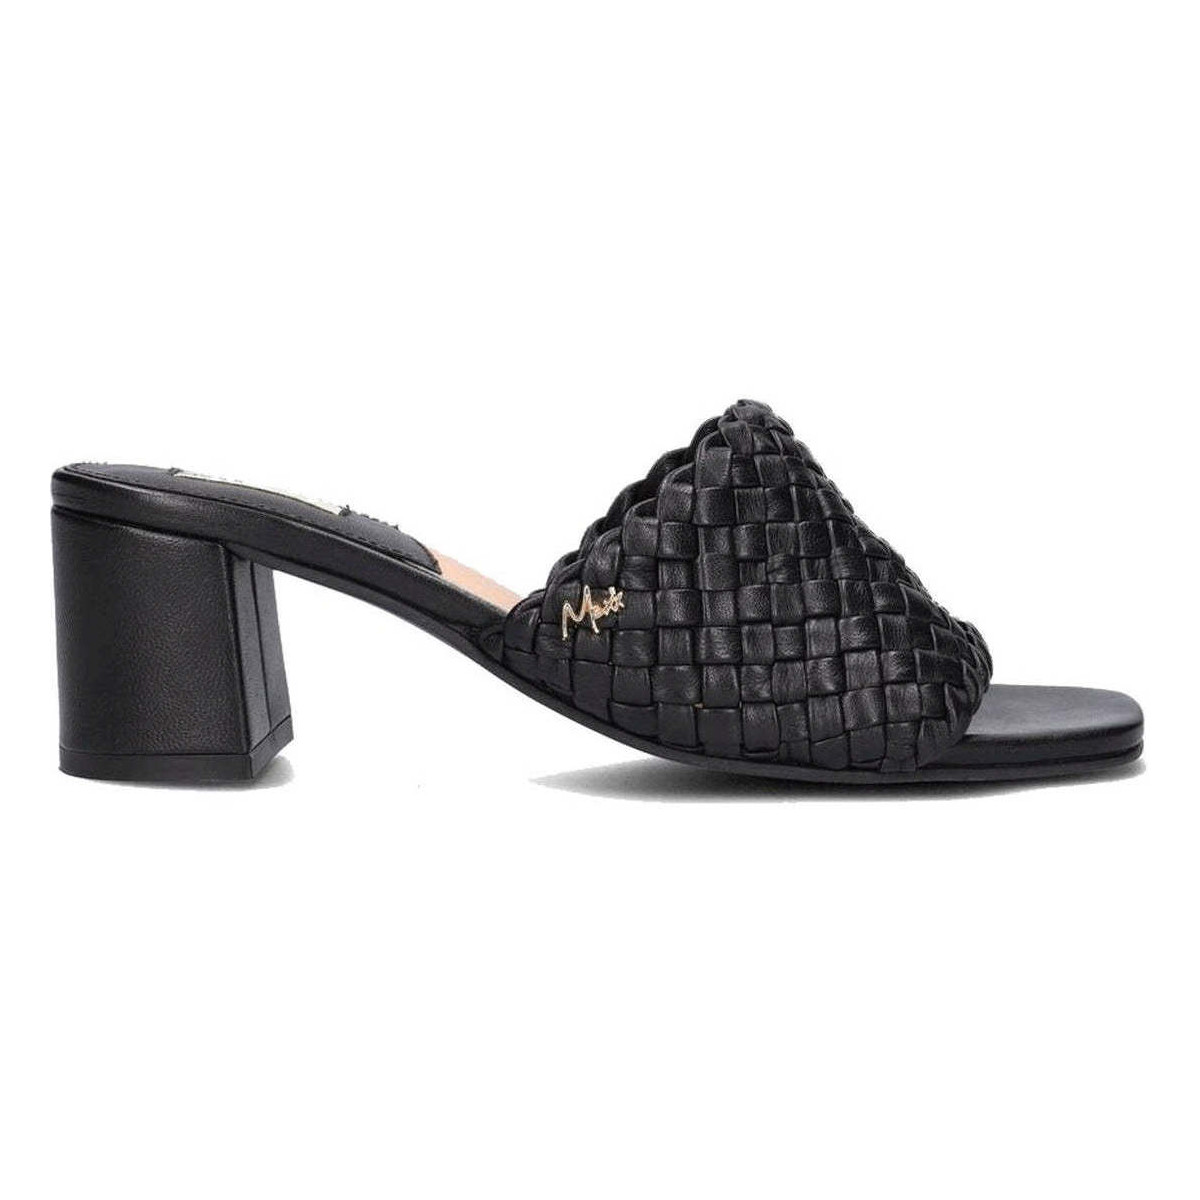 Chaussures Femme Sandales sport Mexx jalara sandals Noir